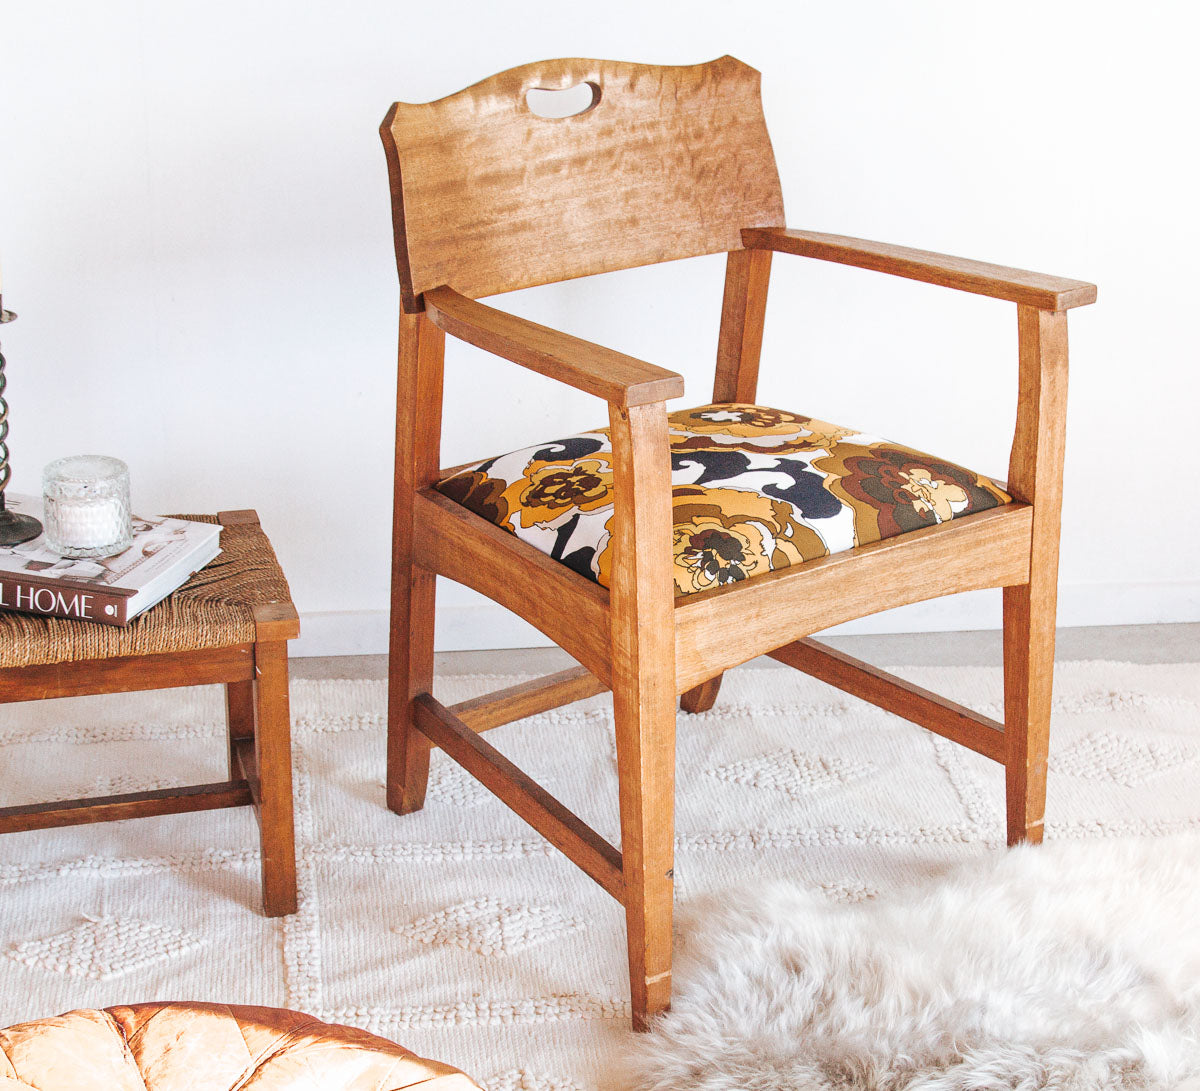 boho furniture retro vintage chair with retro floral patterned upholstery blonde oak frame